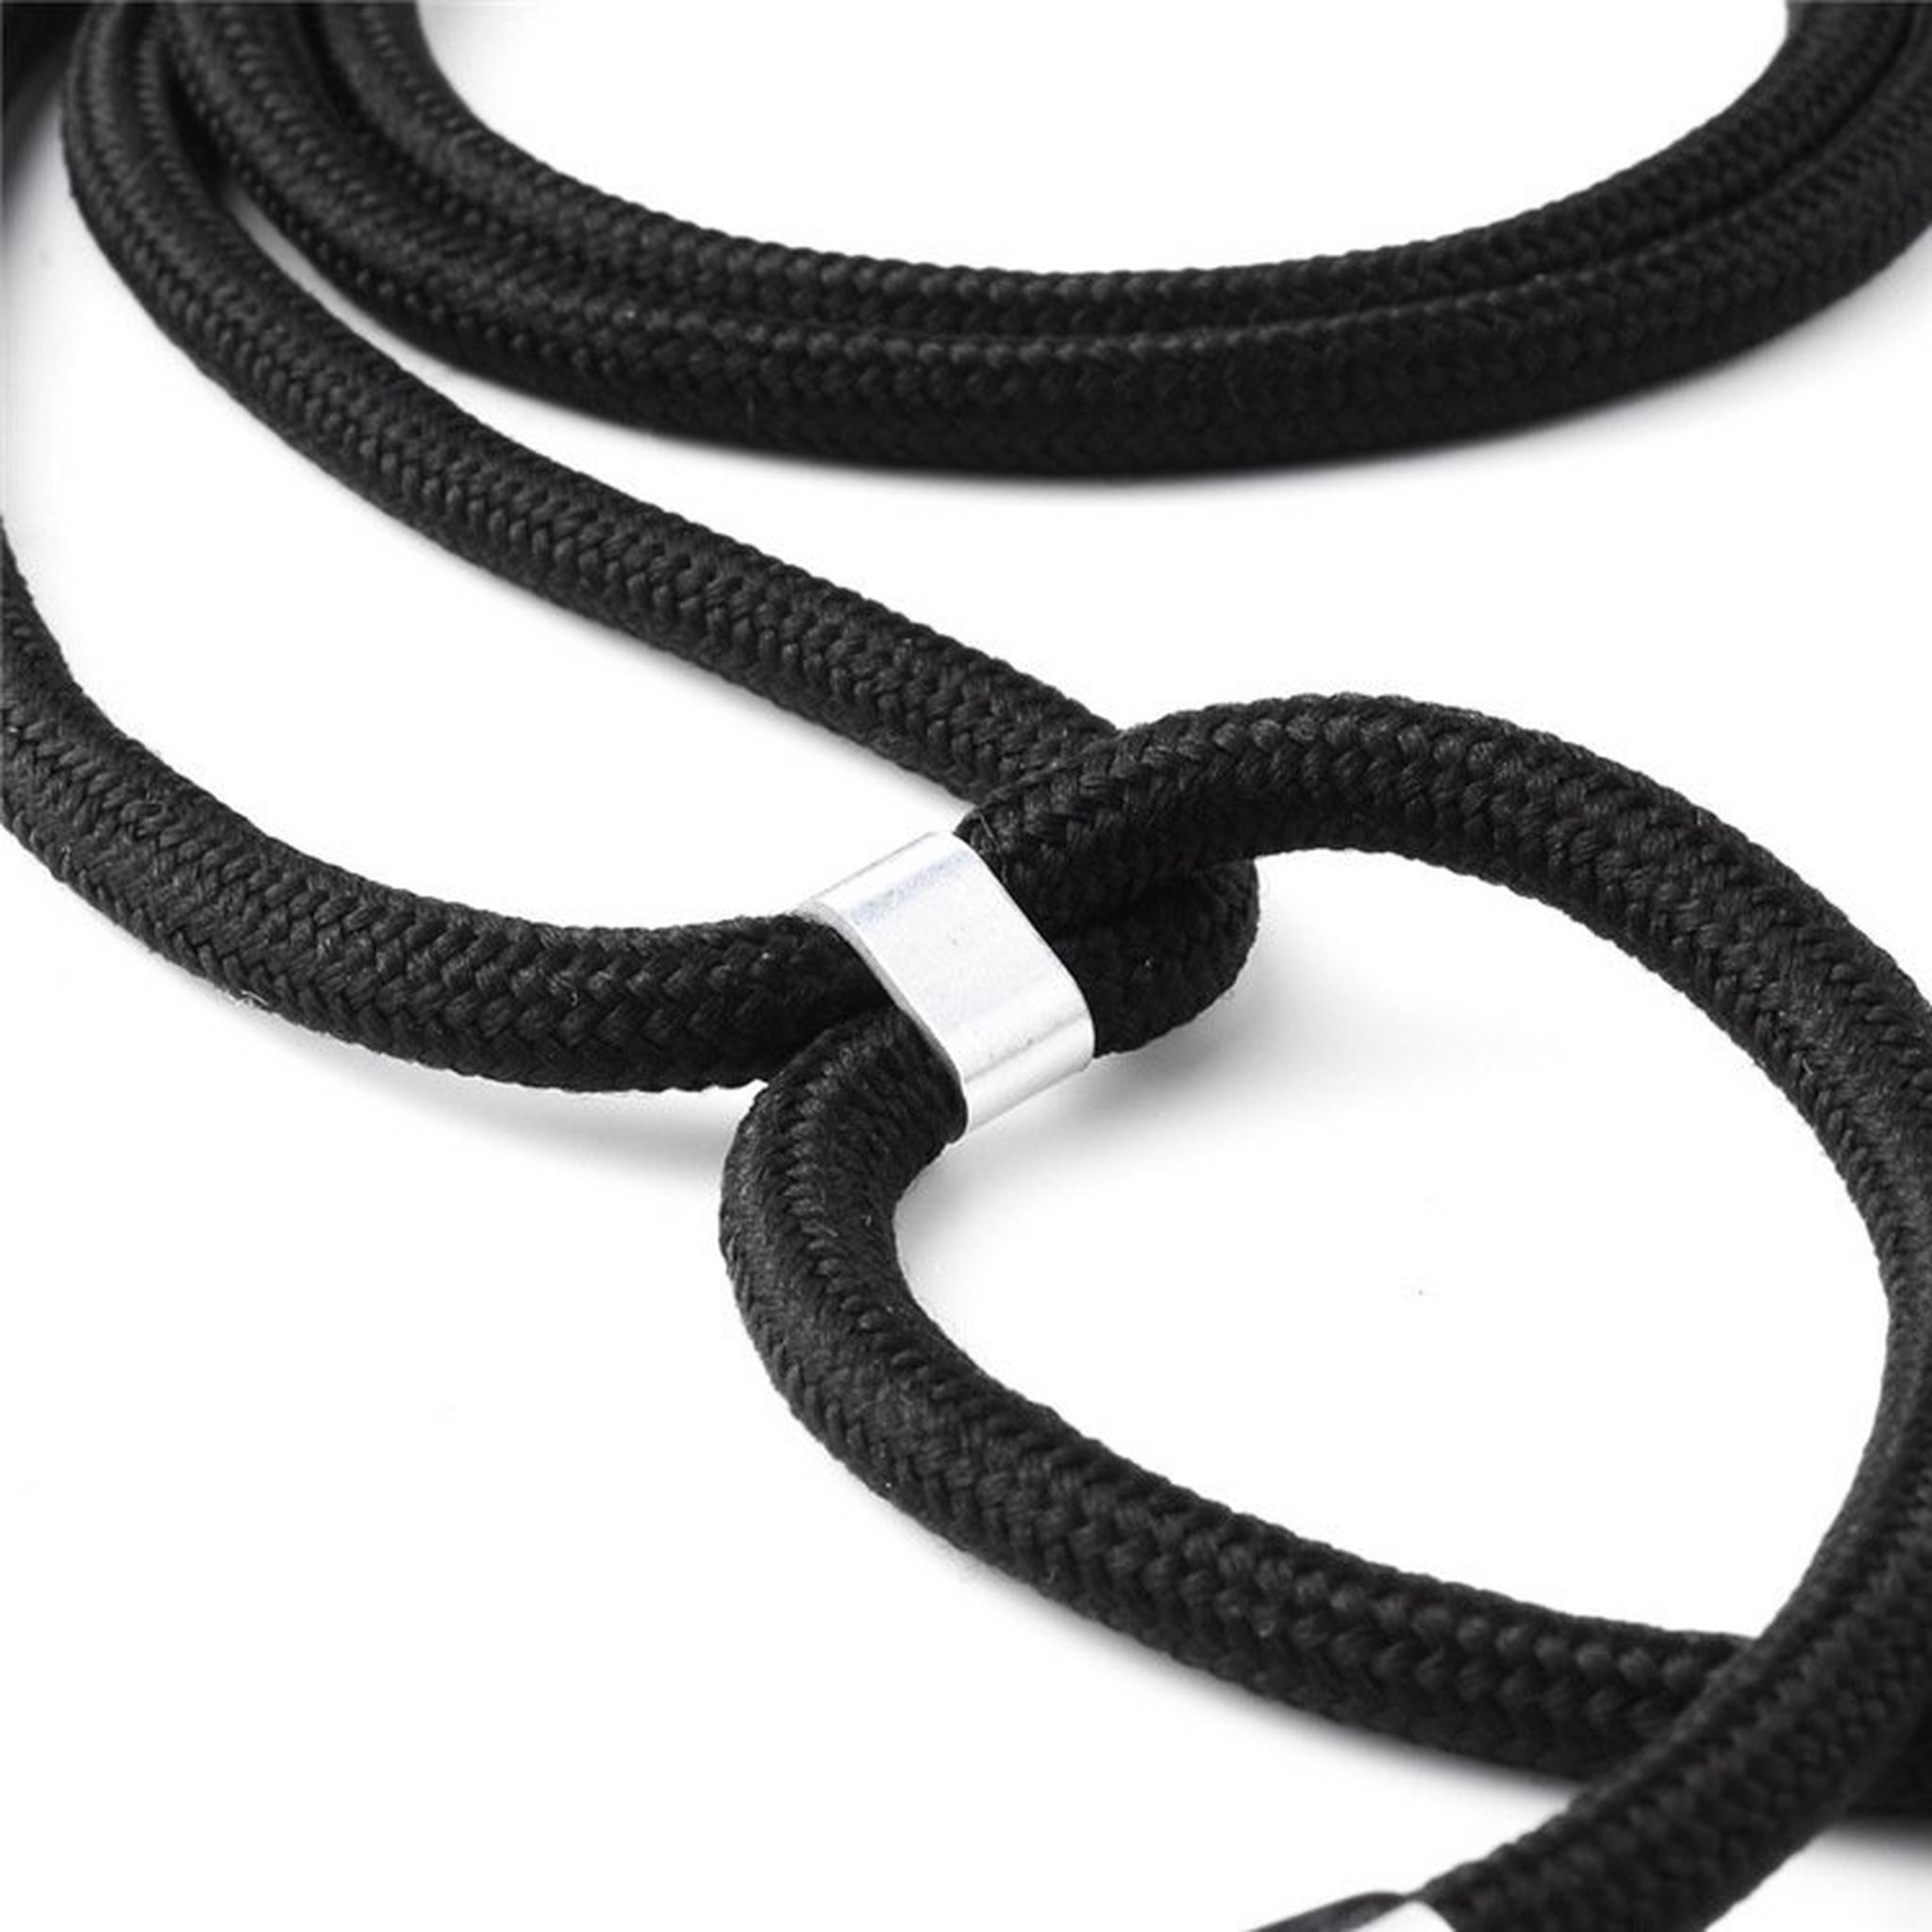 EQ Necklace String iPhone 11 Case - Black Strap